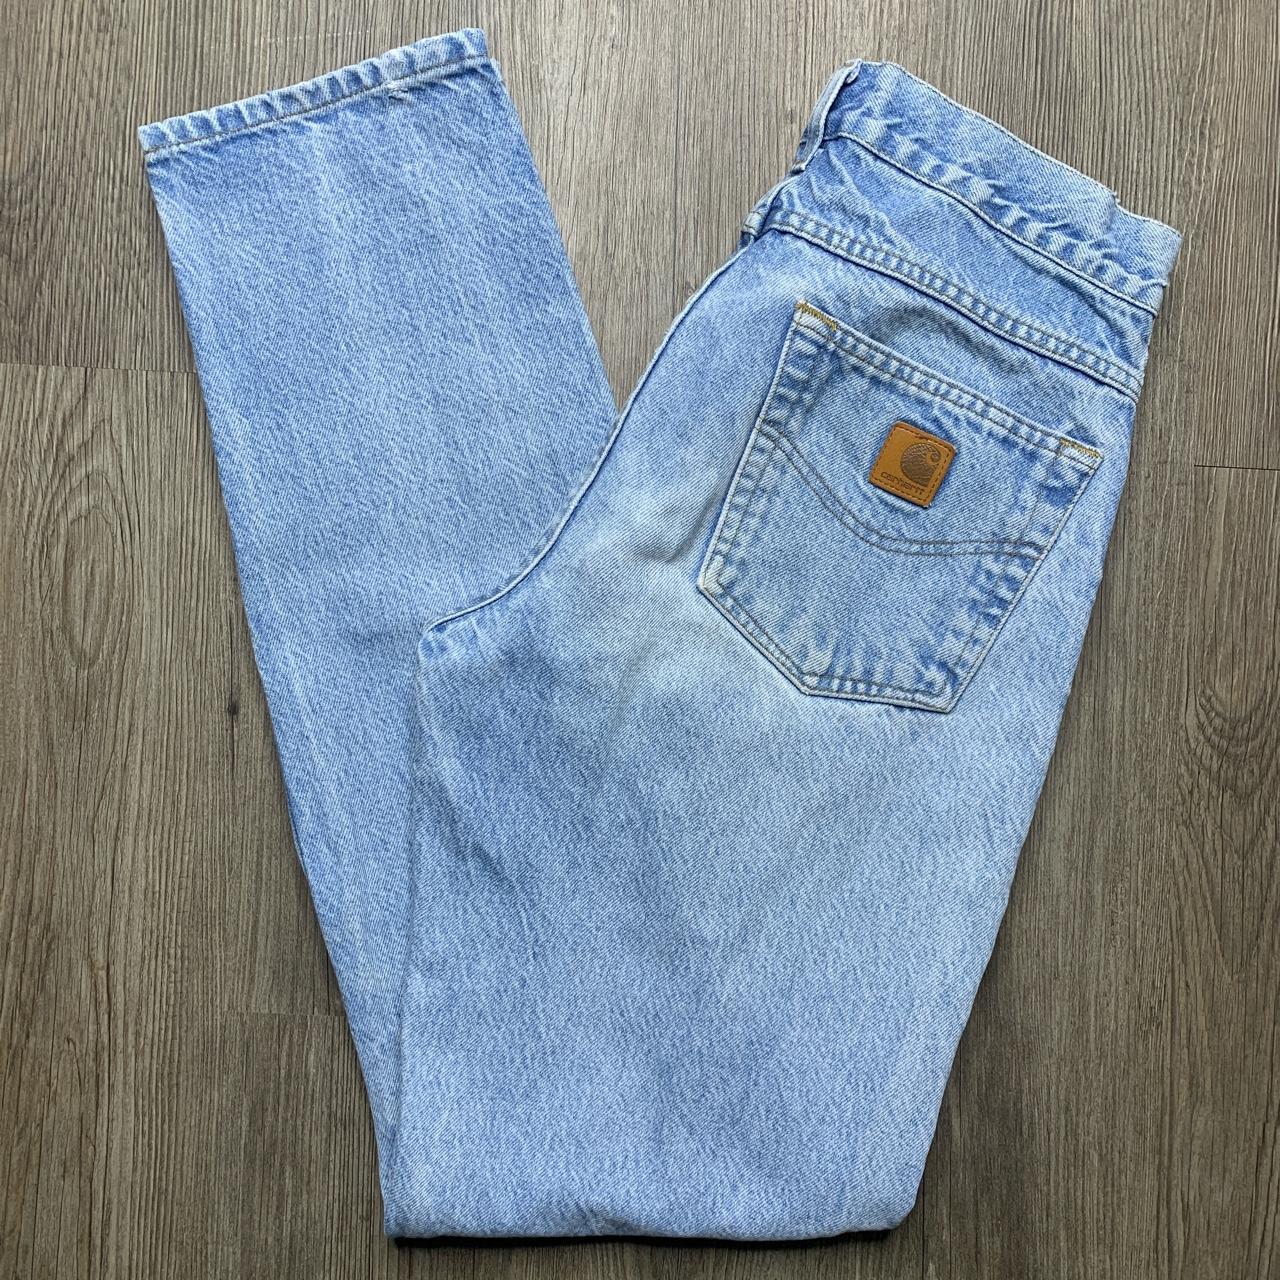 Vintage Carhartt Work Jeans Y2K size 30x34 but fit a... - Depop